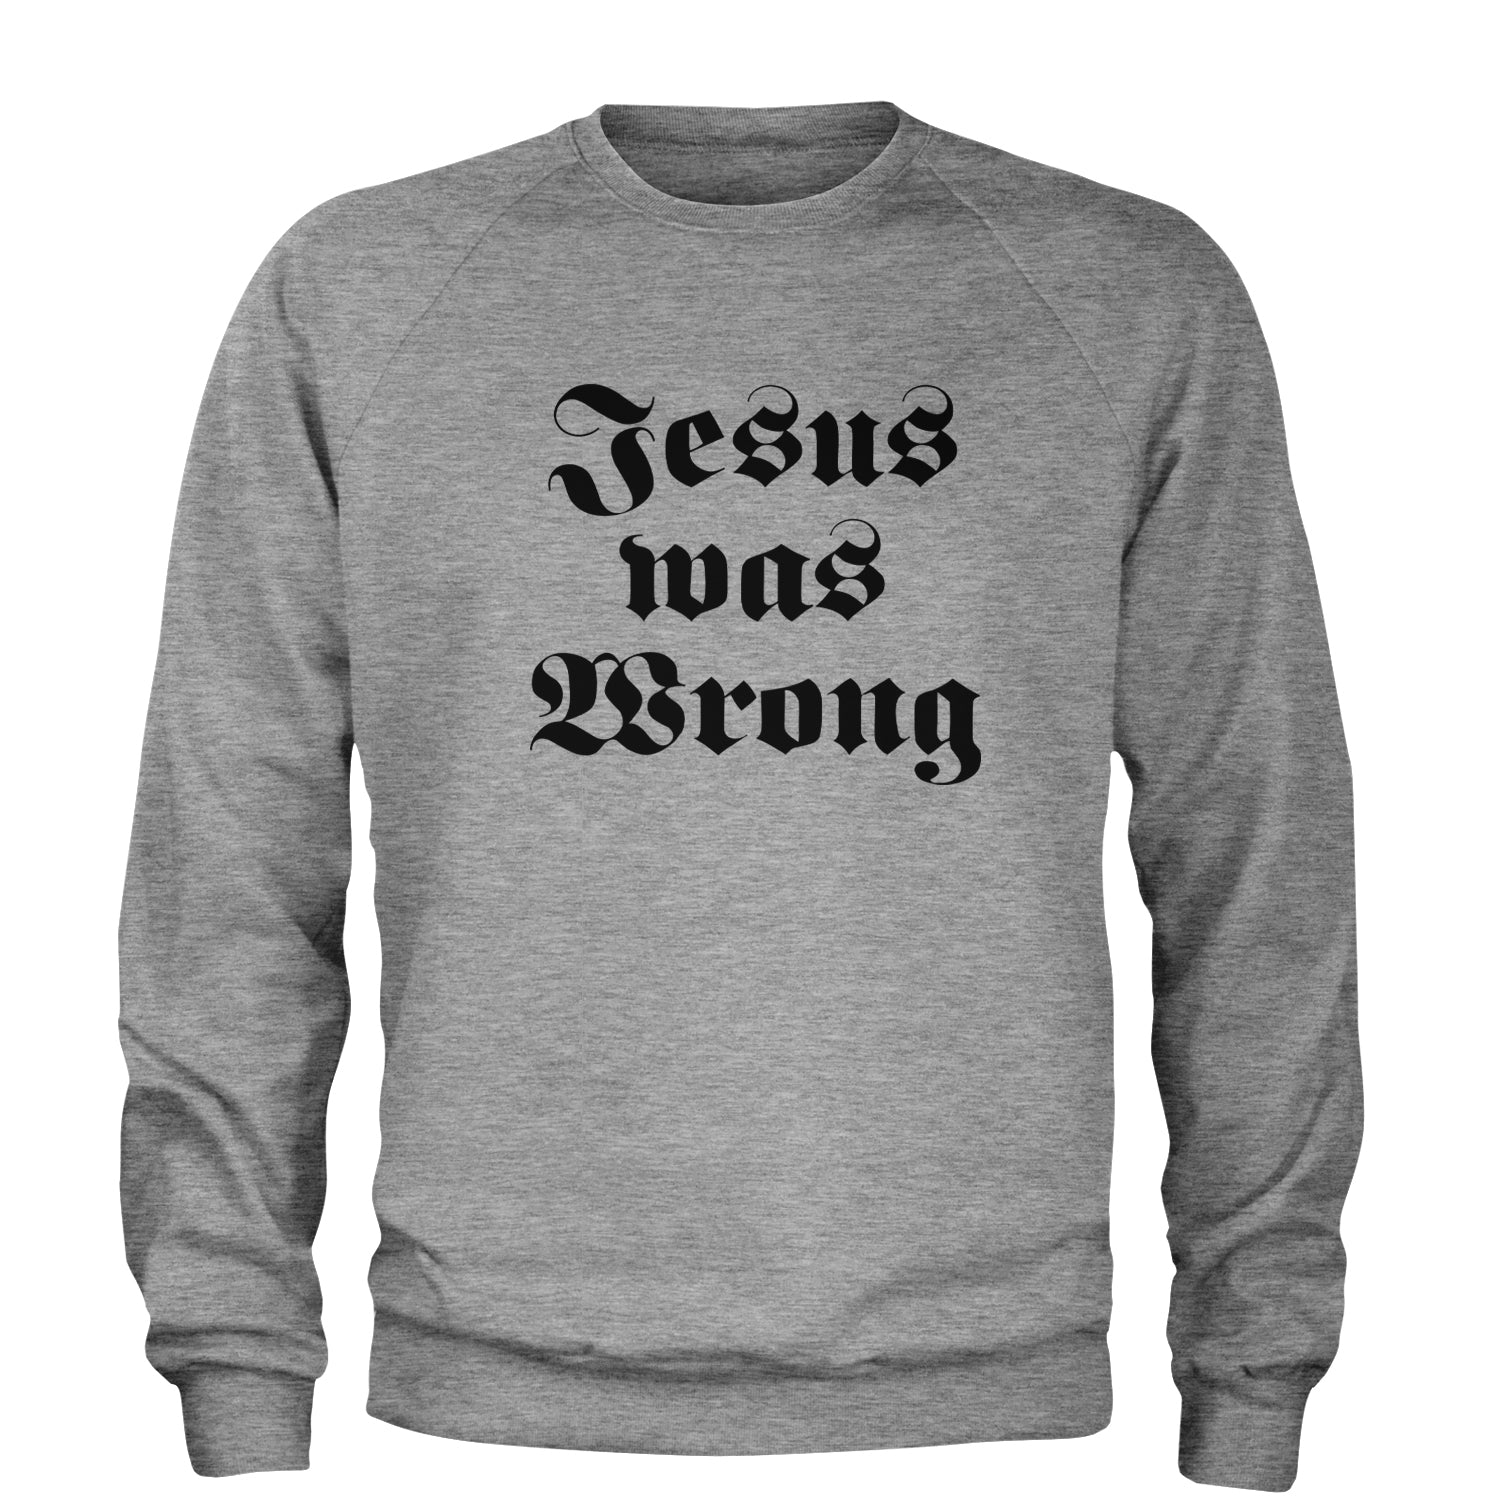 Jesus Was Wrong Little Miss Sunshine Adult Crewneck Sweatshirt breslin, dano, movie, paul, shine, shirt, sun by Expression Tees